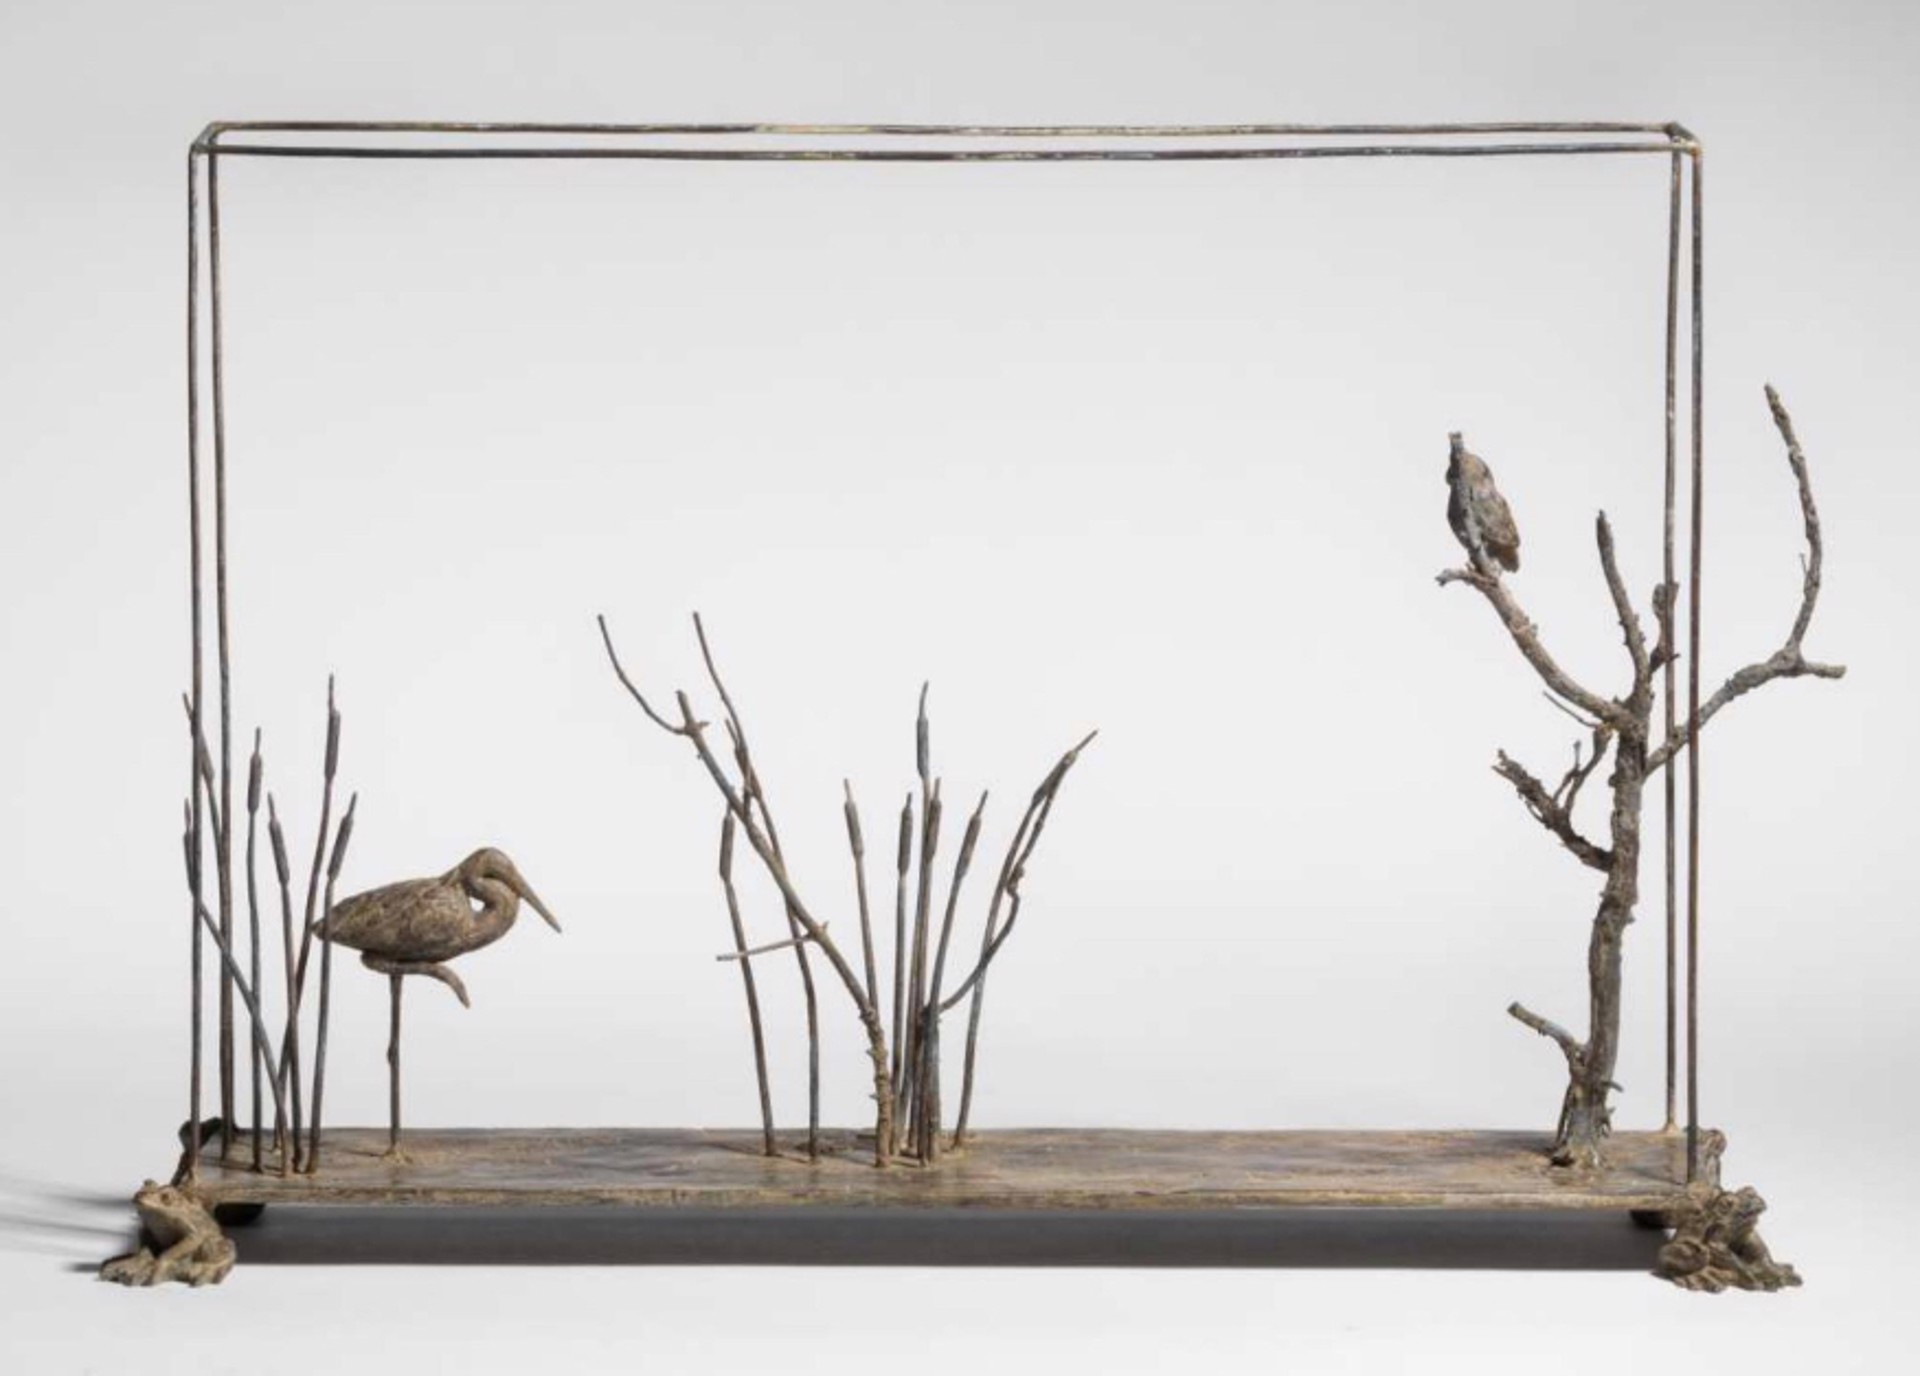 Heron among the Reeds 'Bolgheri' by Nicola Lazzari